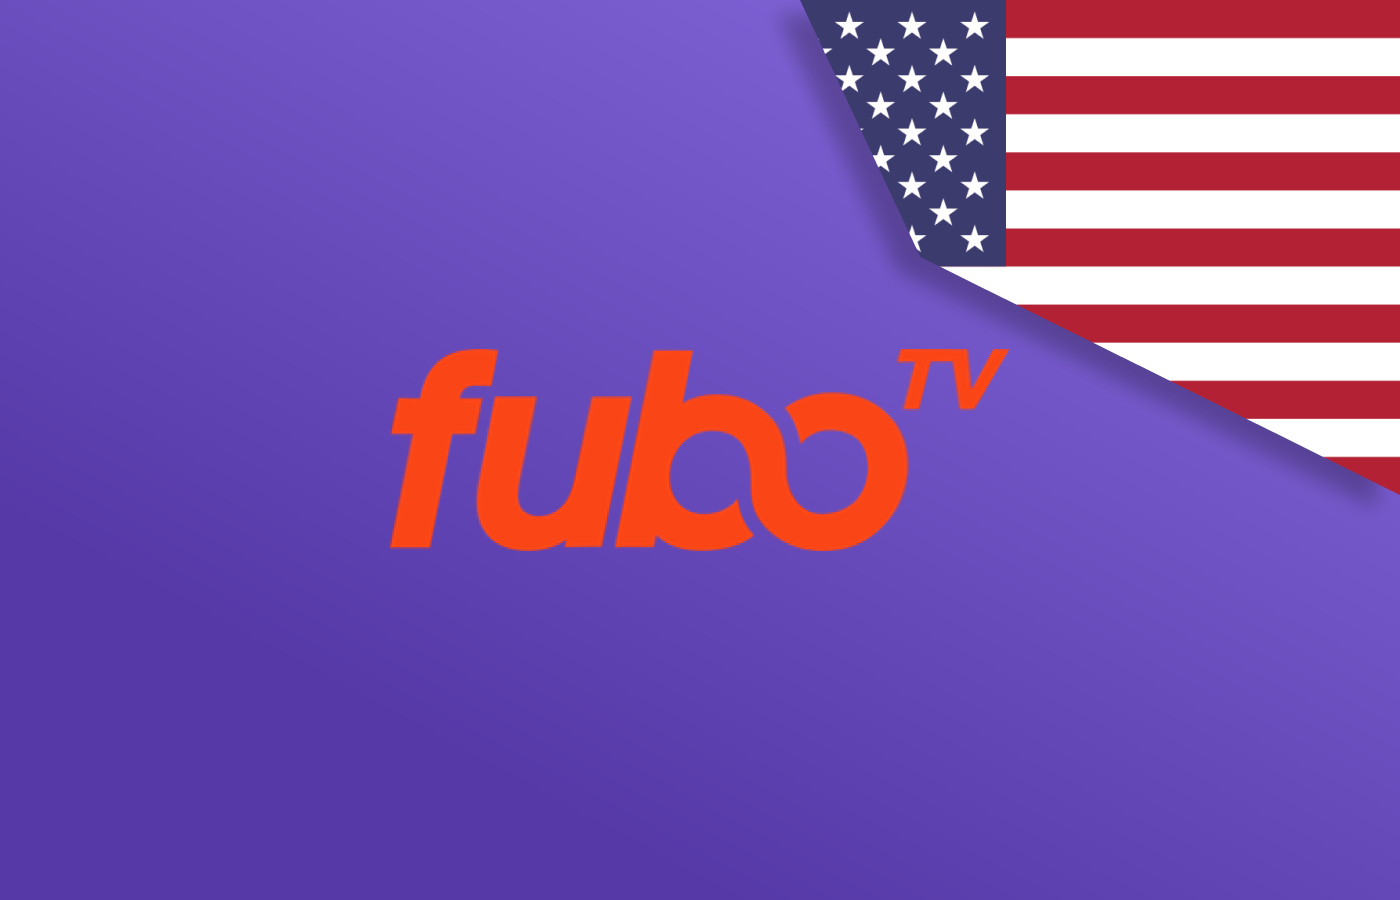 Watch FuboTV Outside USA